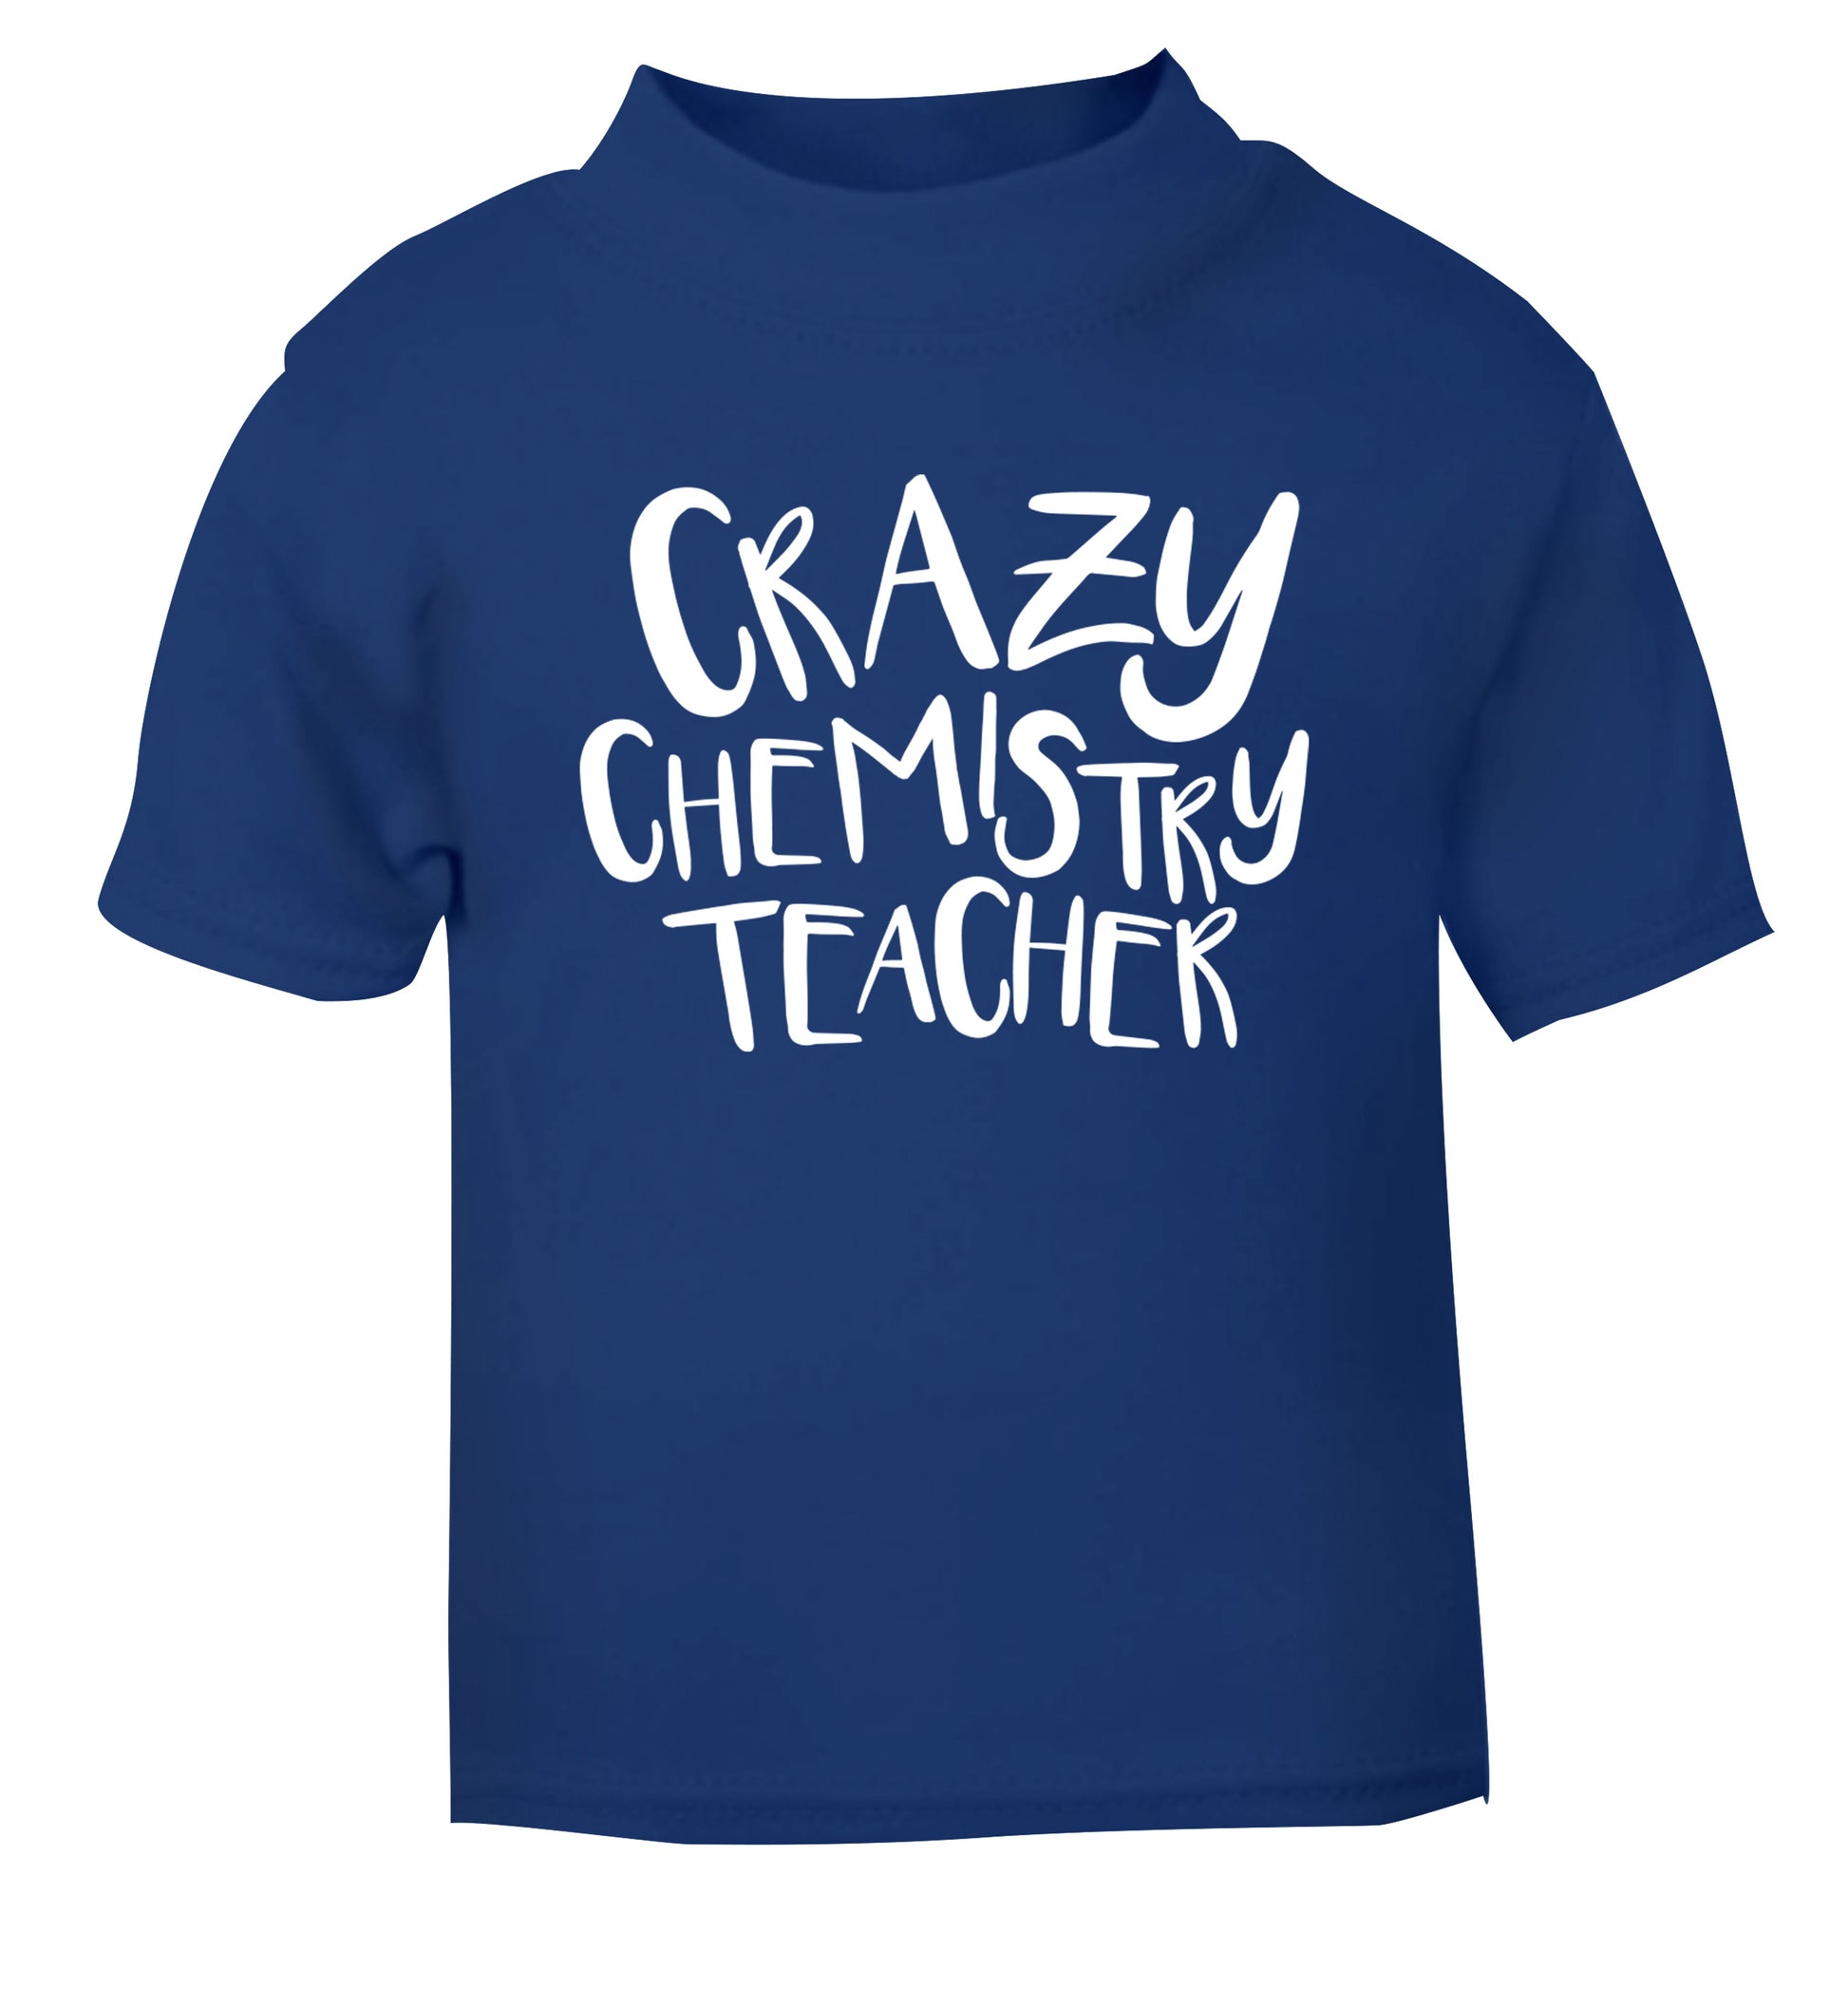 Crazy chemistry teacher blue Baby Toddler Tshirt 2 Years